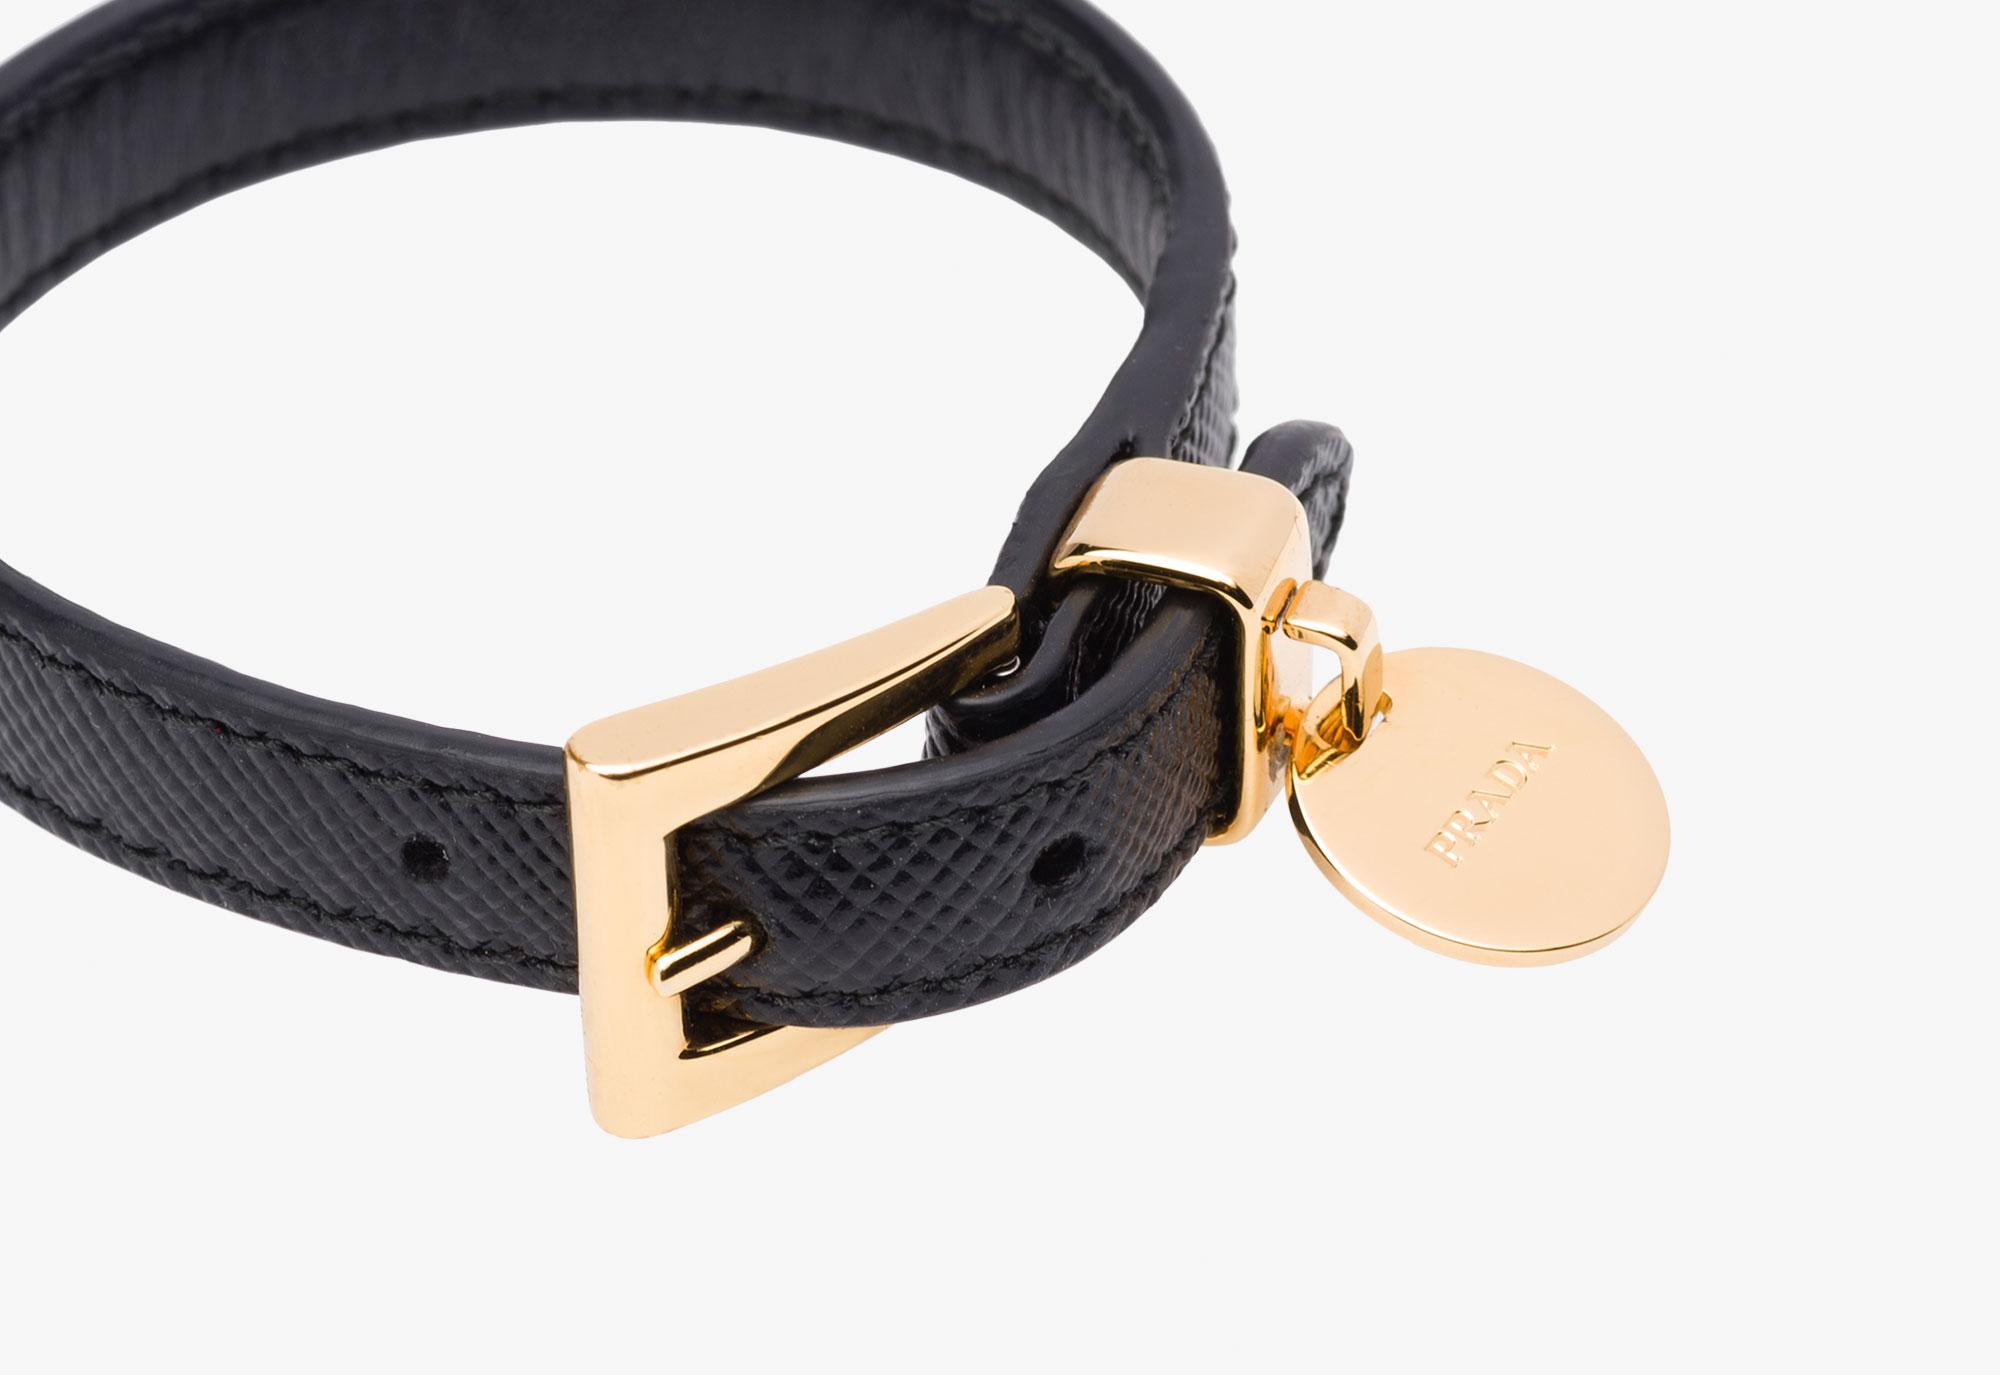 Prada Saffiano Leather Bracelet in Black - Lyst